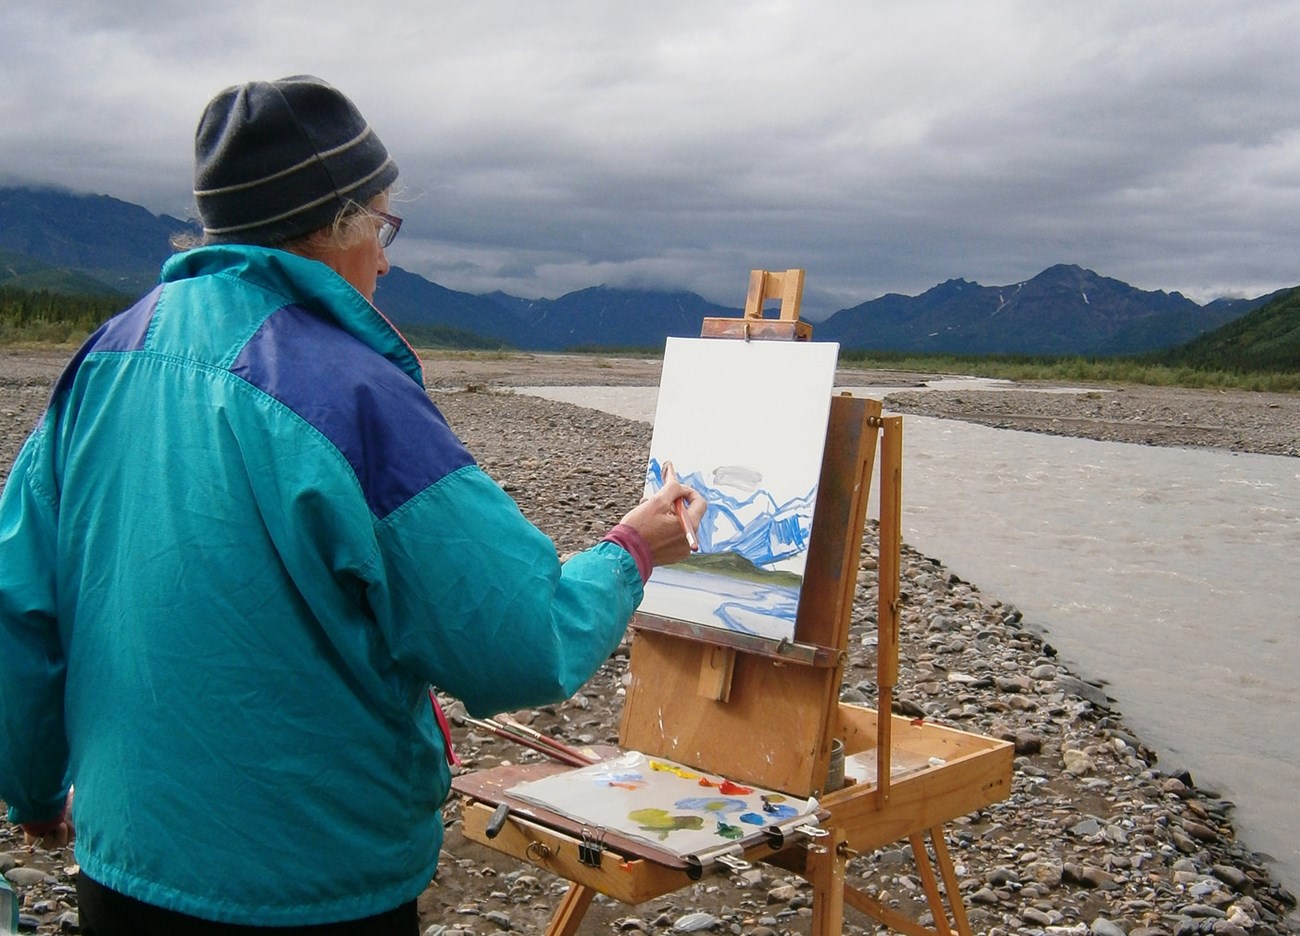 Man painting a canvas on an easel along a shoreline.